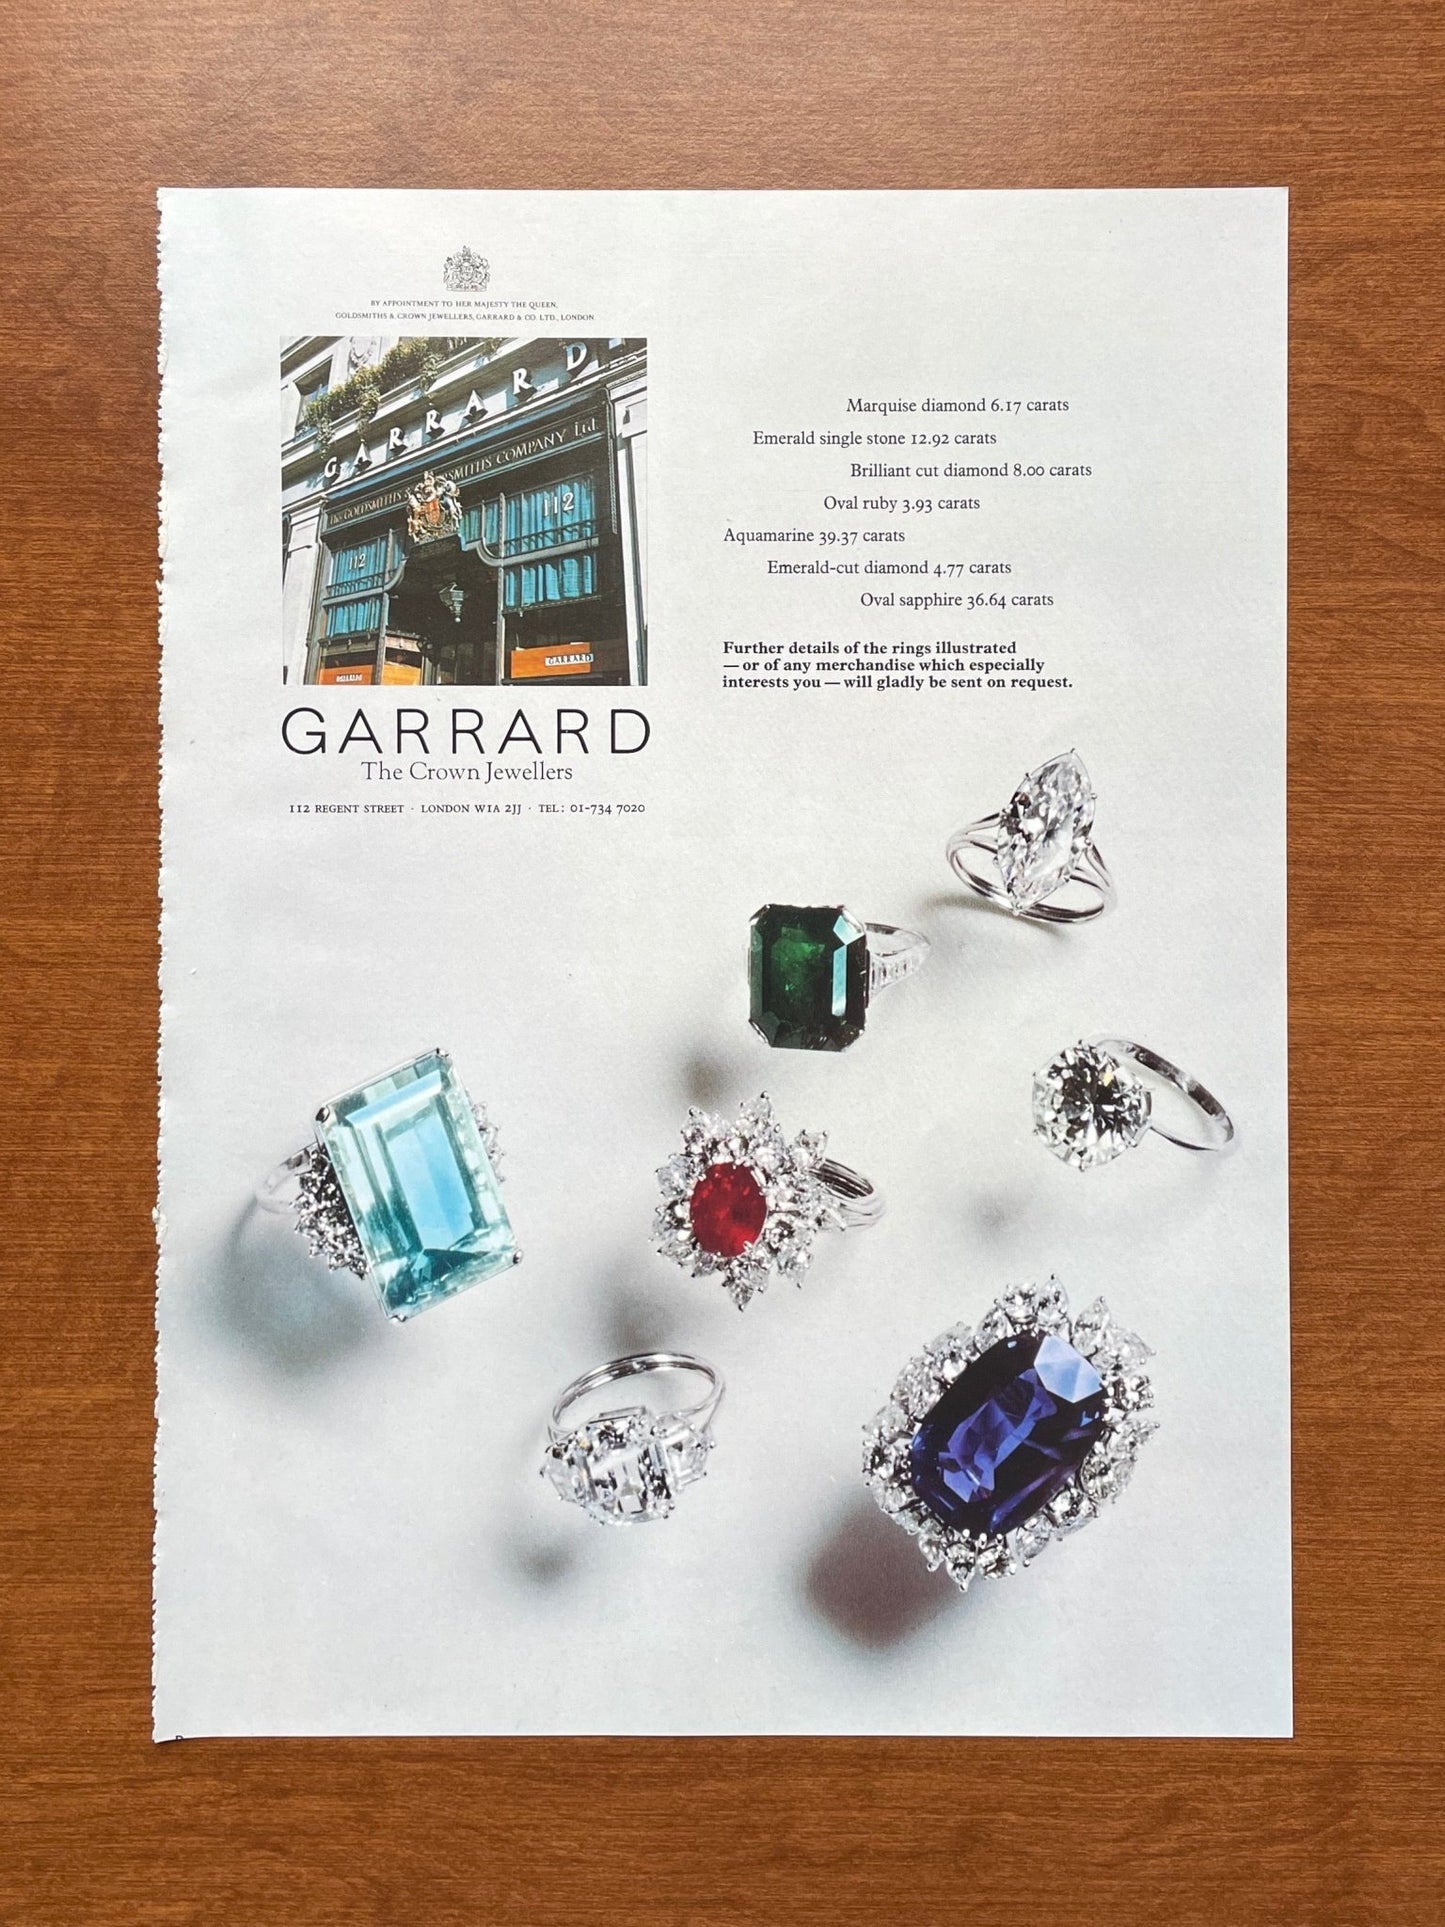 Garrard "The Crown Jewellers" Advertisement